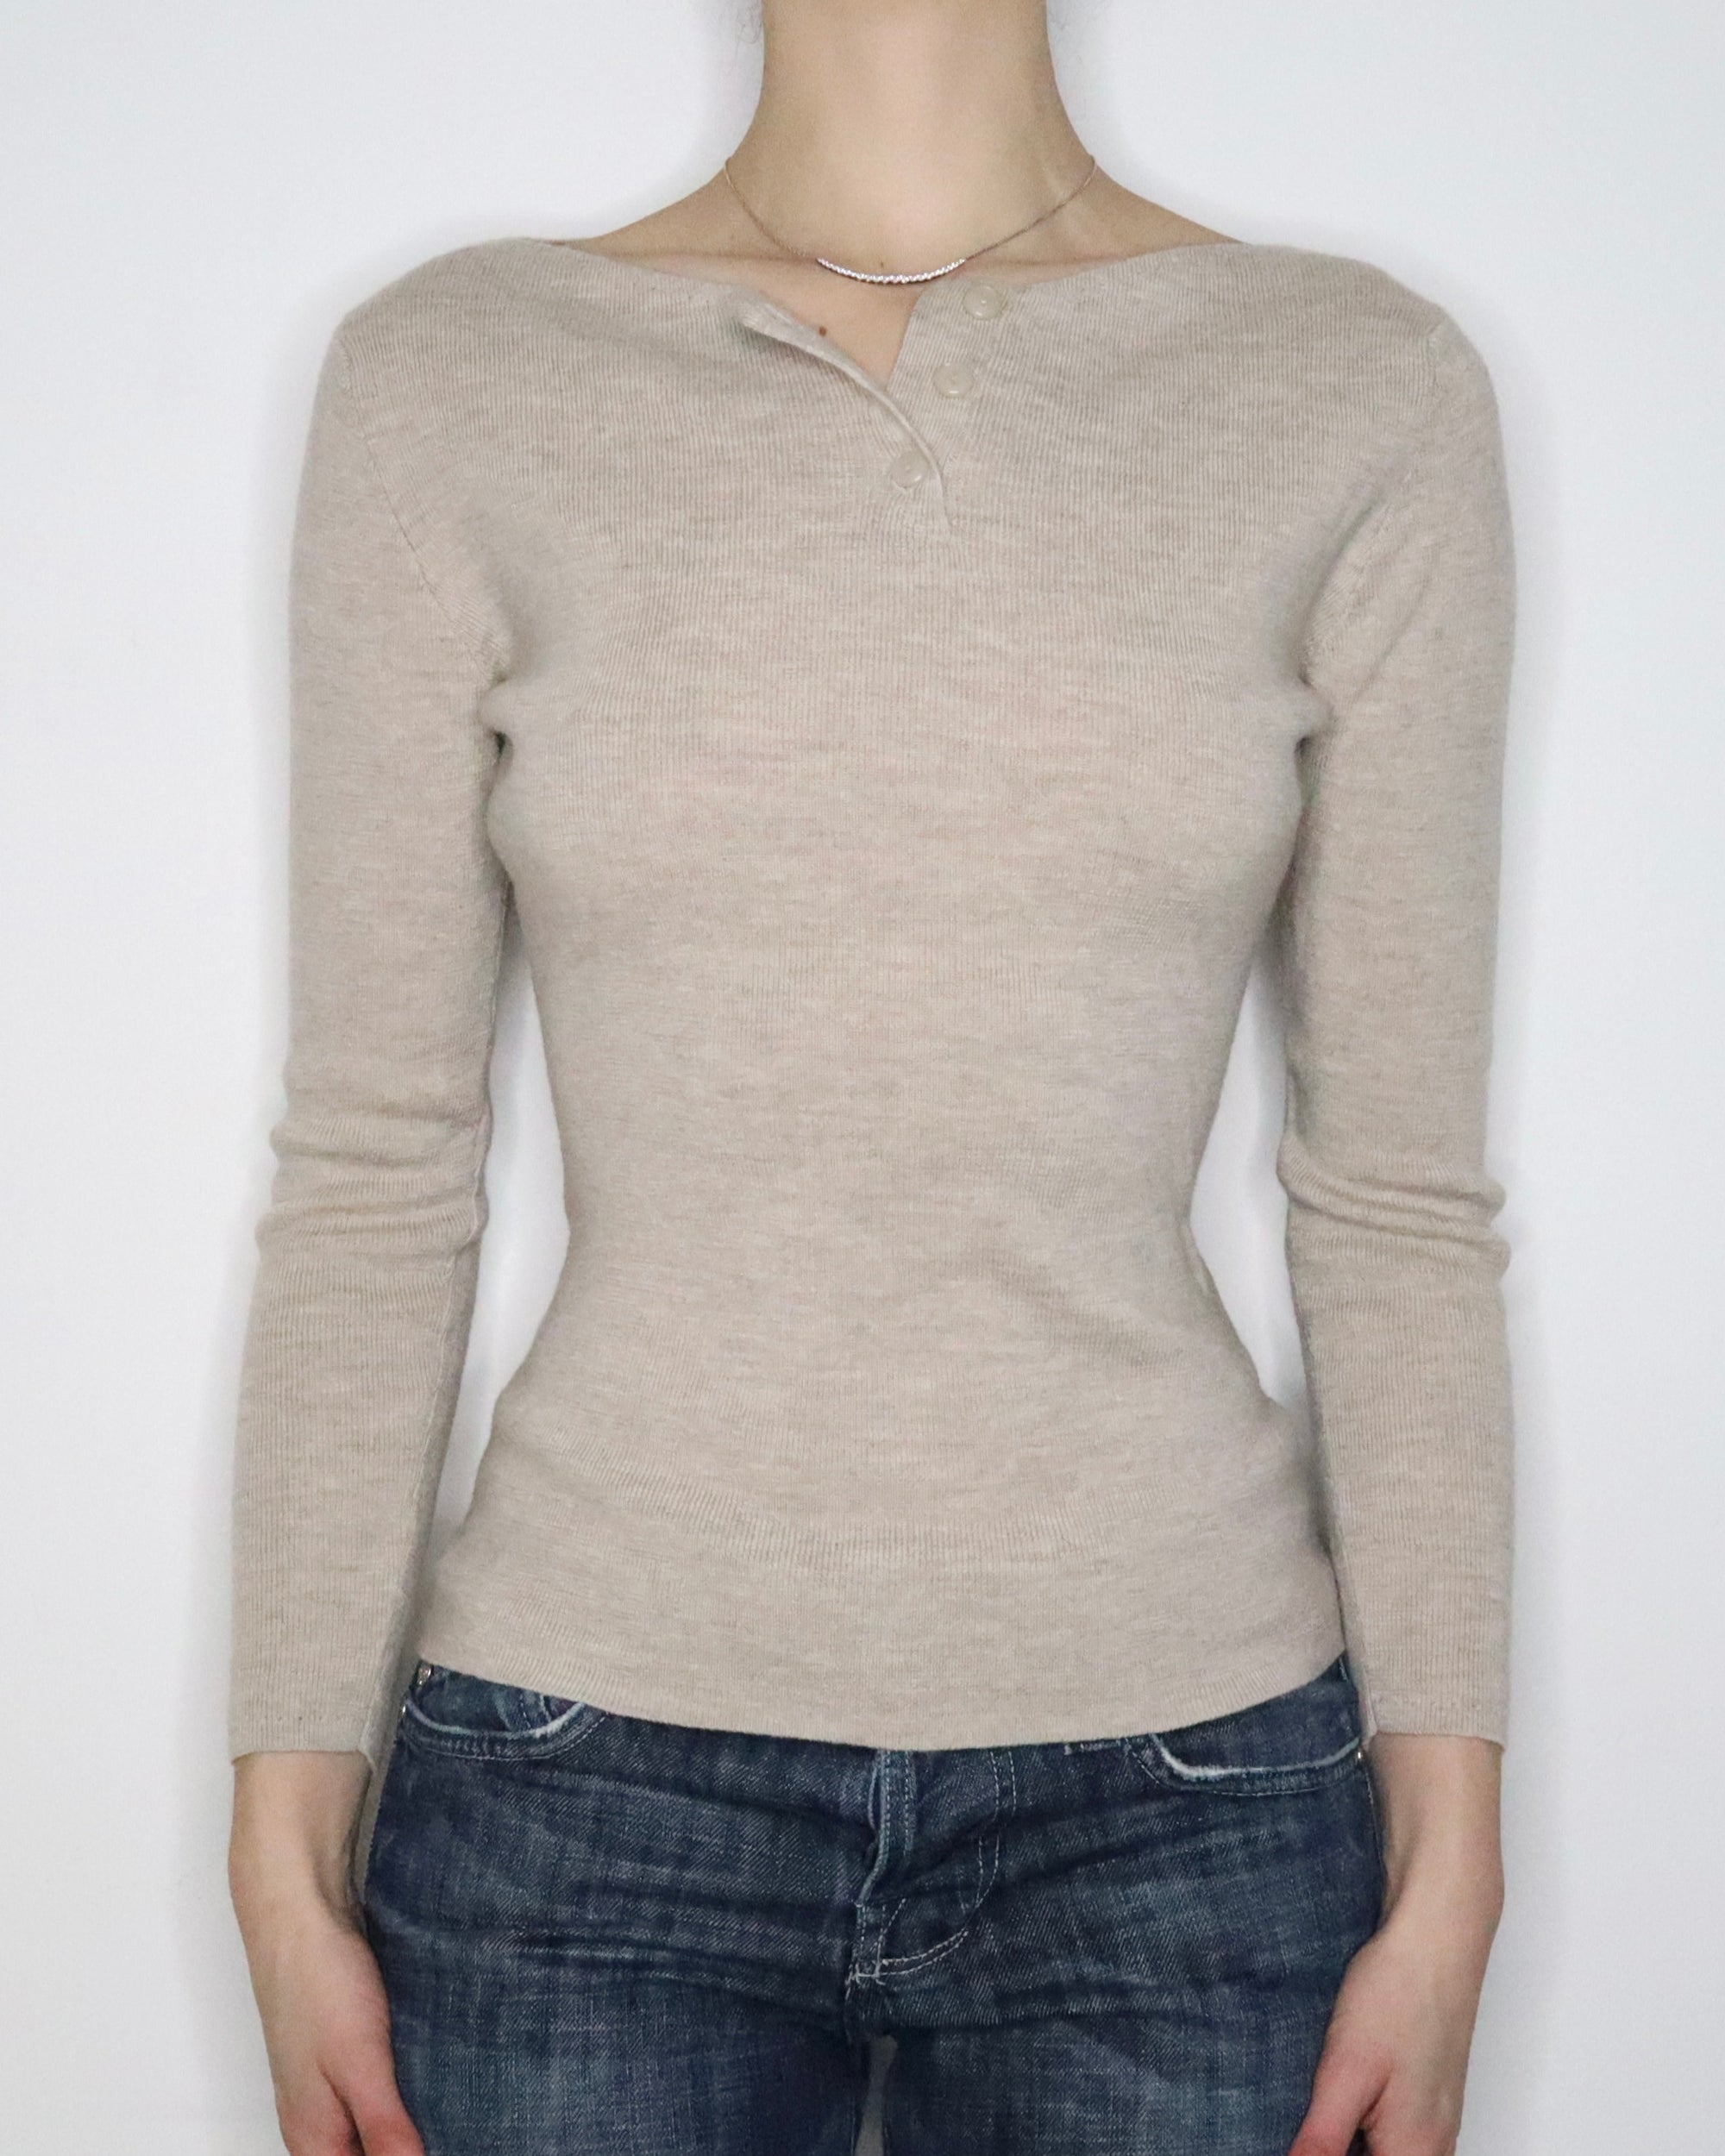 Italian Soft Wool Sweater (Small) 